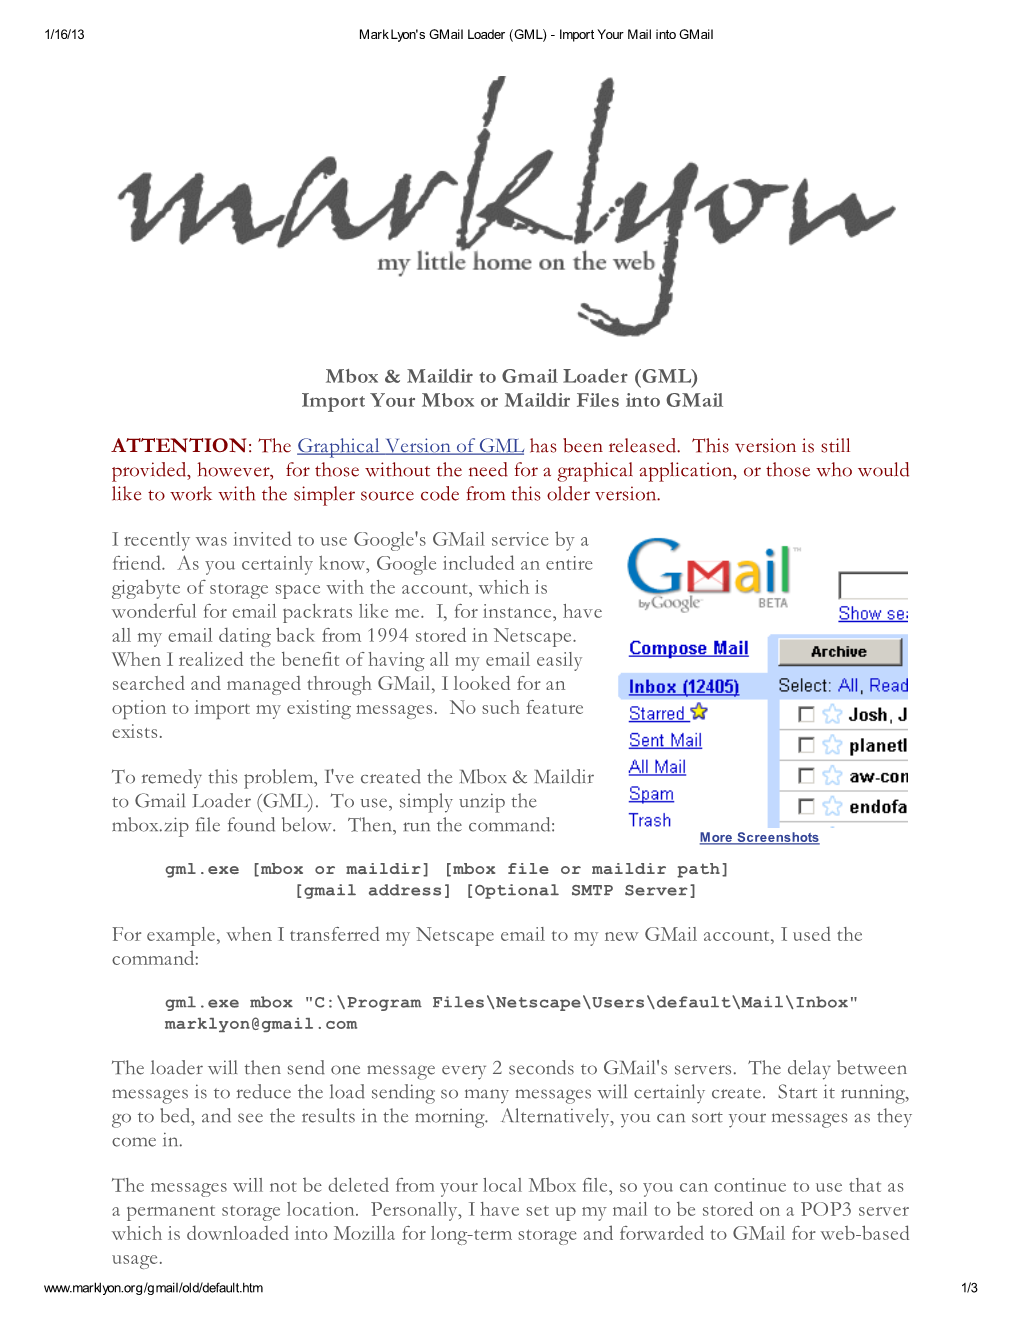 Mbox & Maildir to Gmail Loader